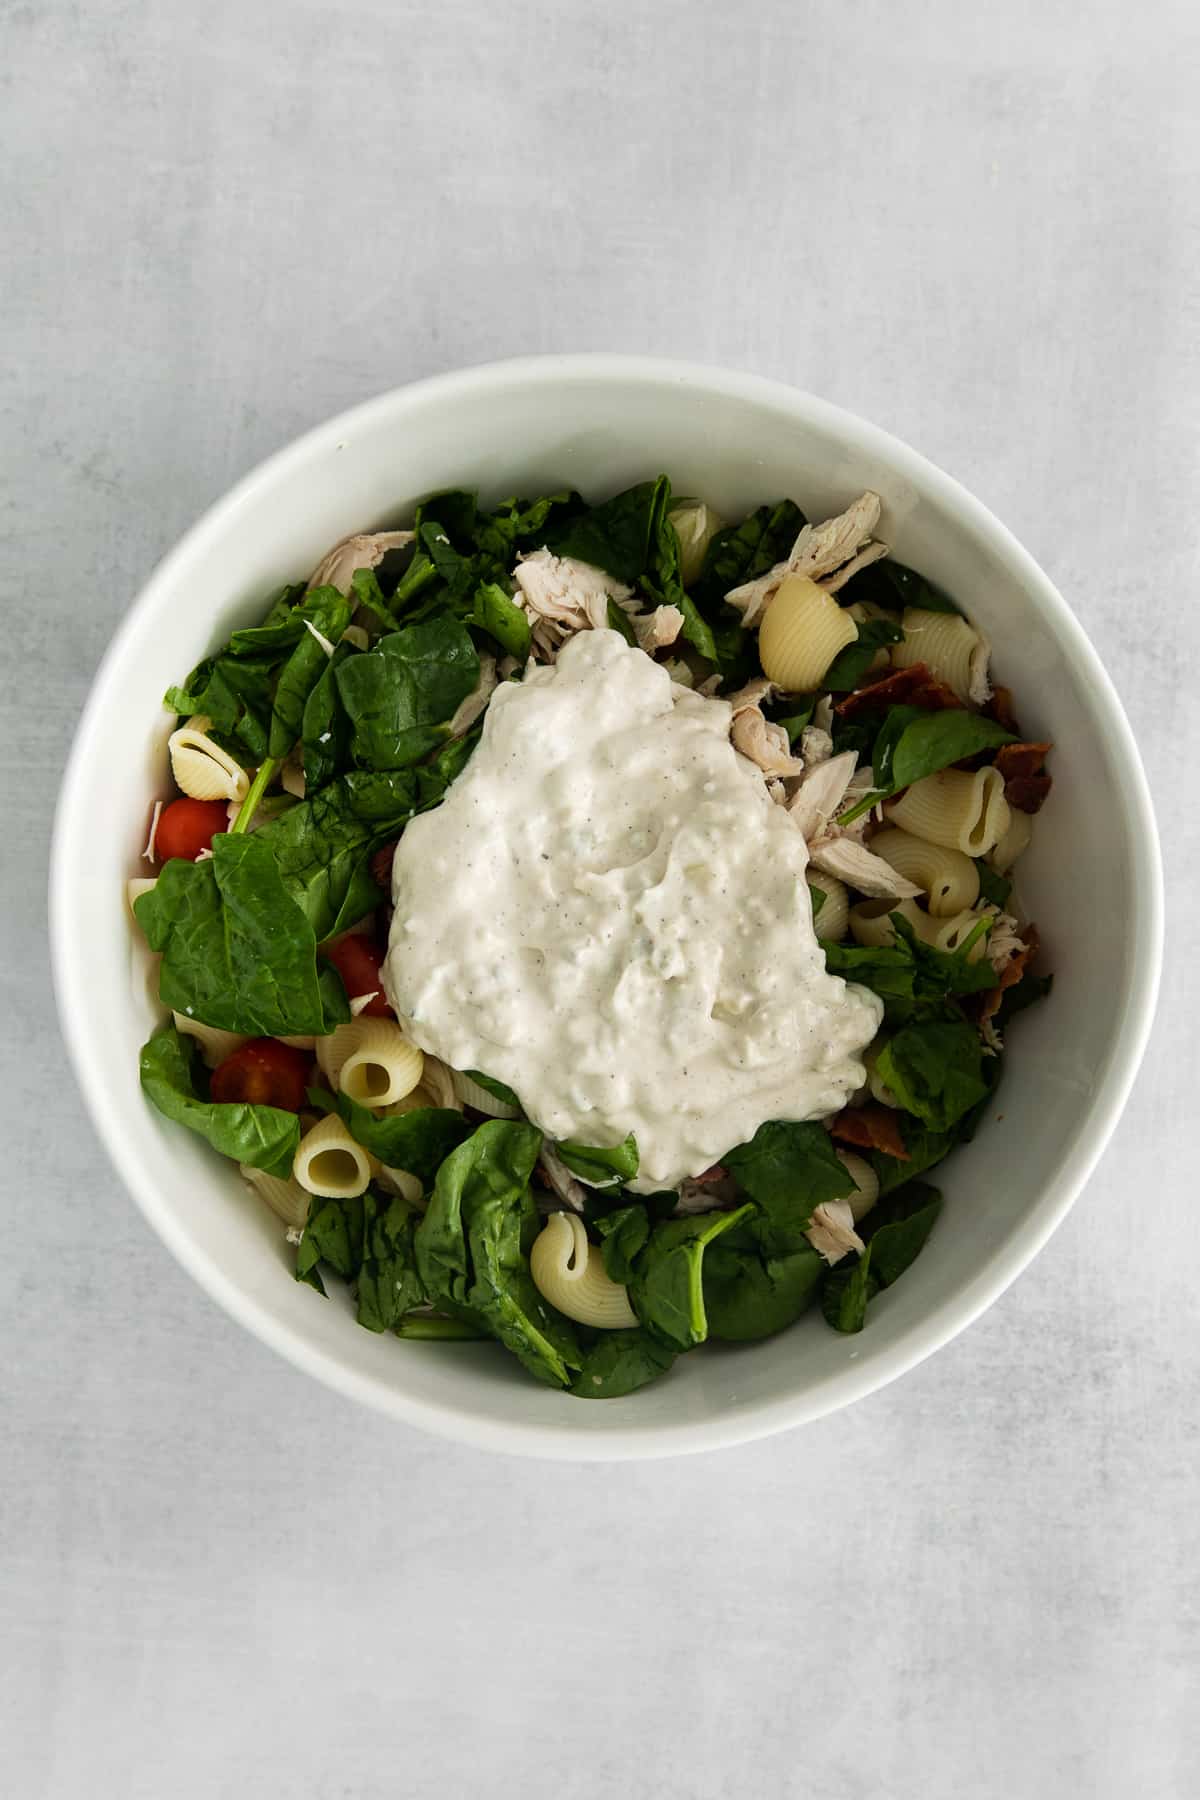 Gorgonzola dressing in a bowl with chicken pasta salad.